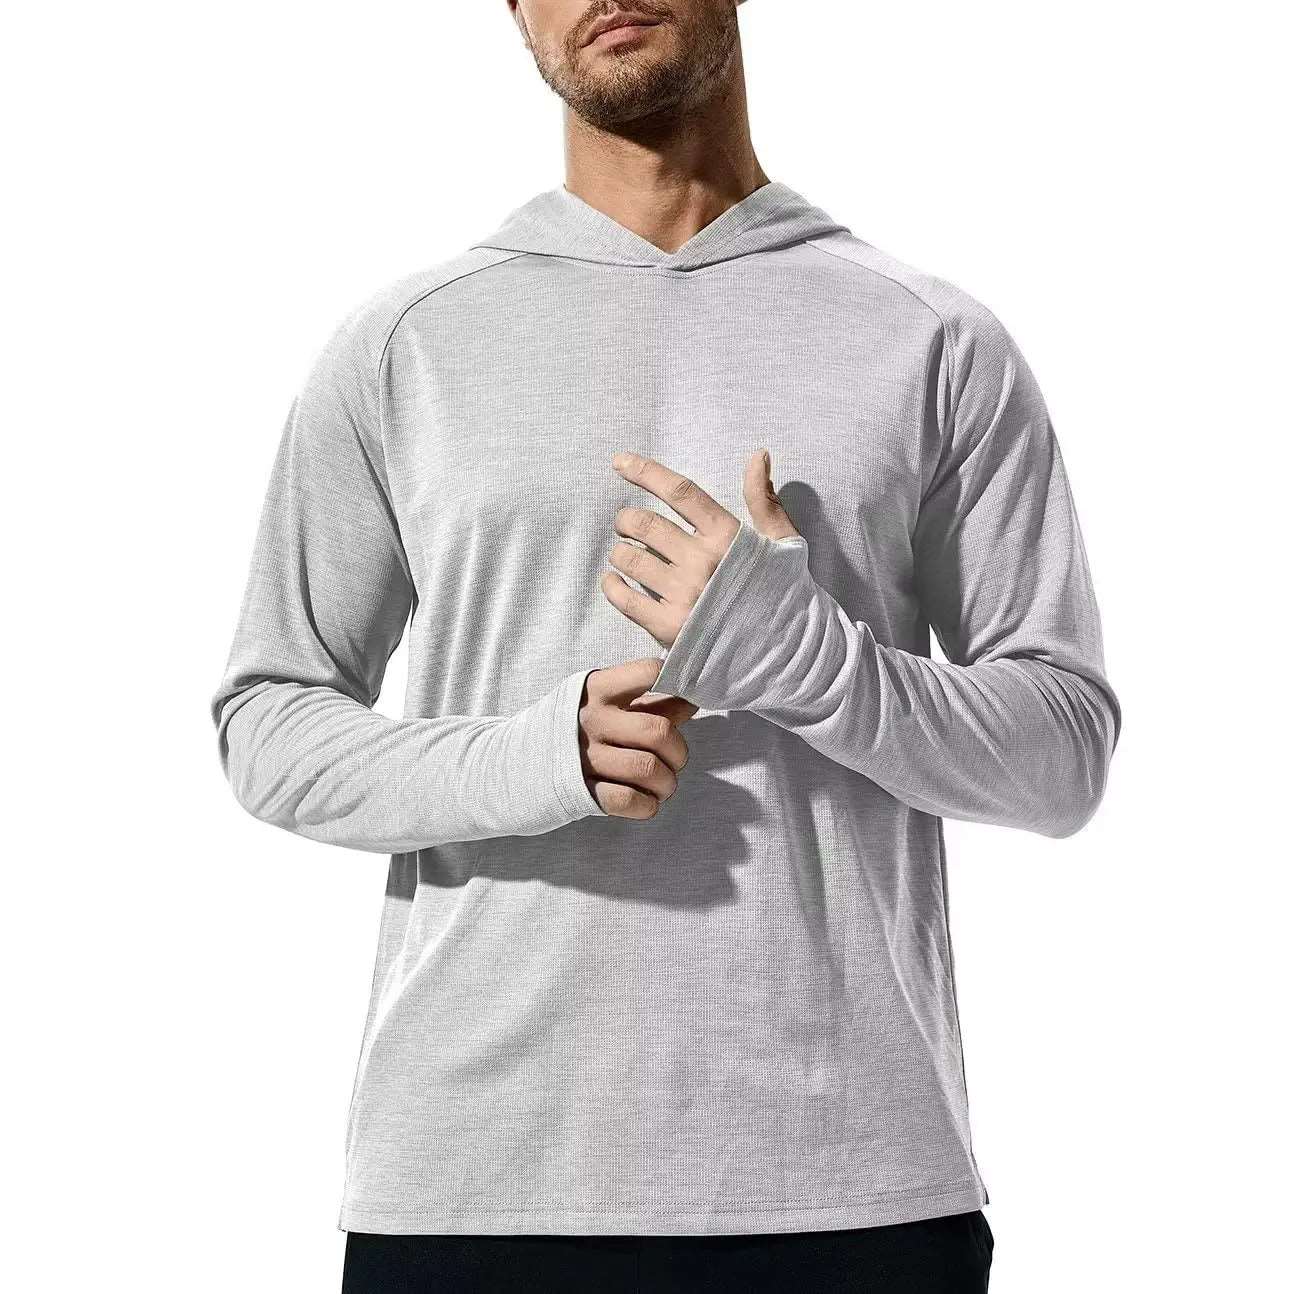 Haimont Men's UPF 50+ Sun Protection Hoodie Shirt with Thumbholes, Haze Blue / XL